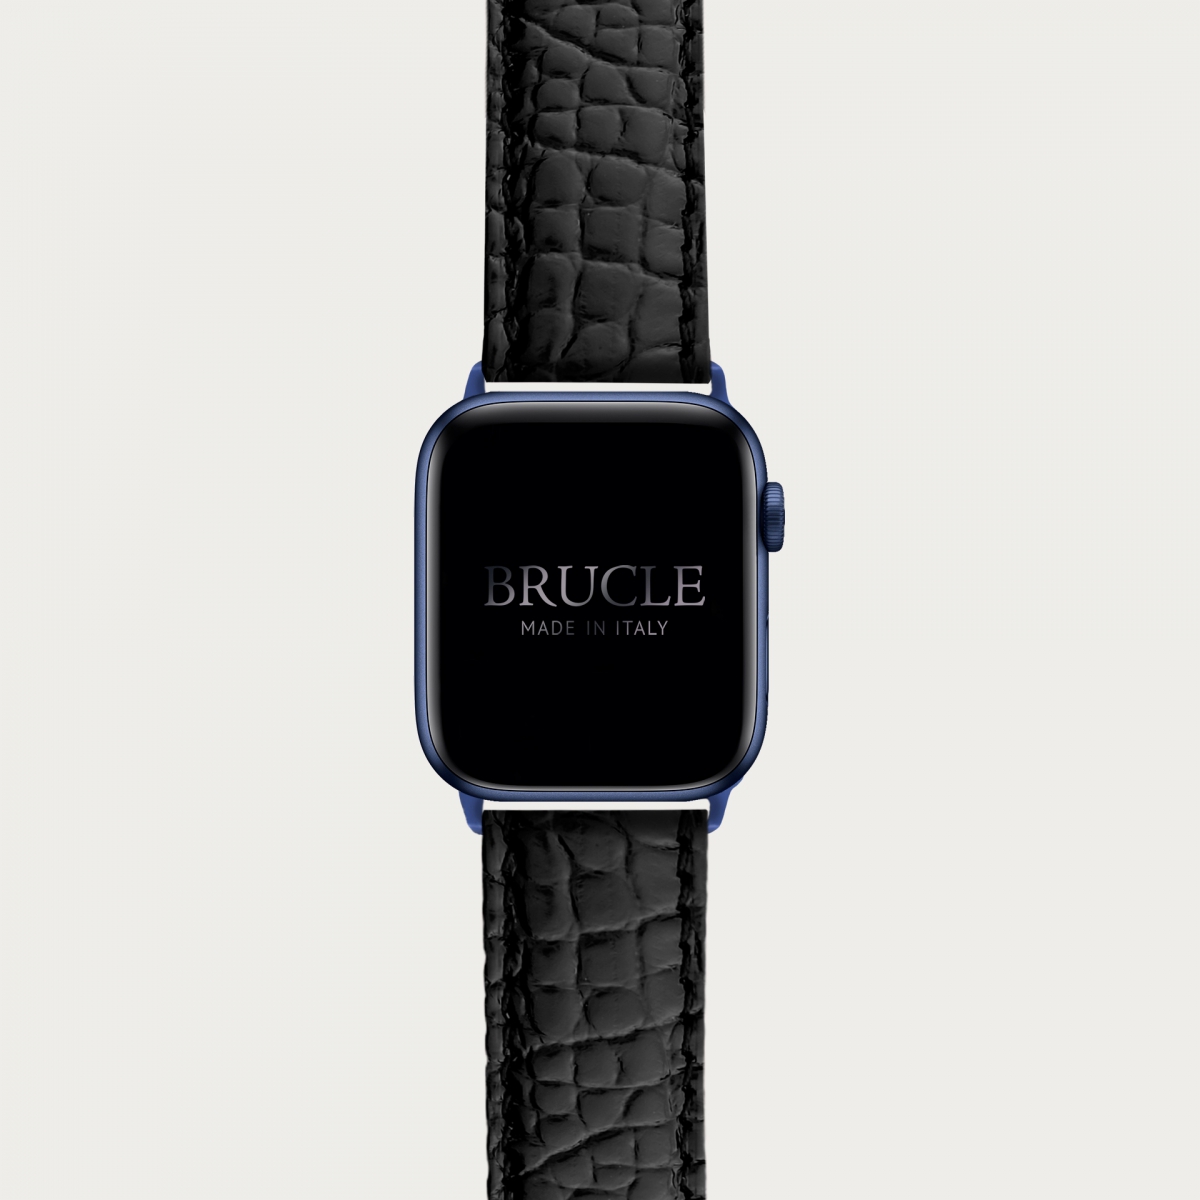 Cinturino nero in alligatore per orologio, Apple Watch e Samsung Galaxy Watch